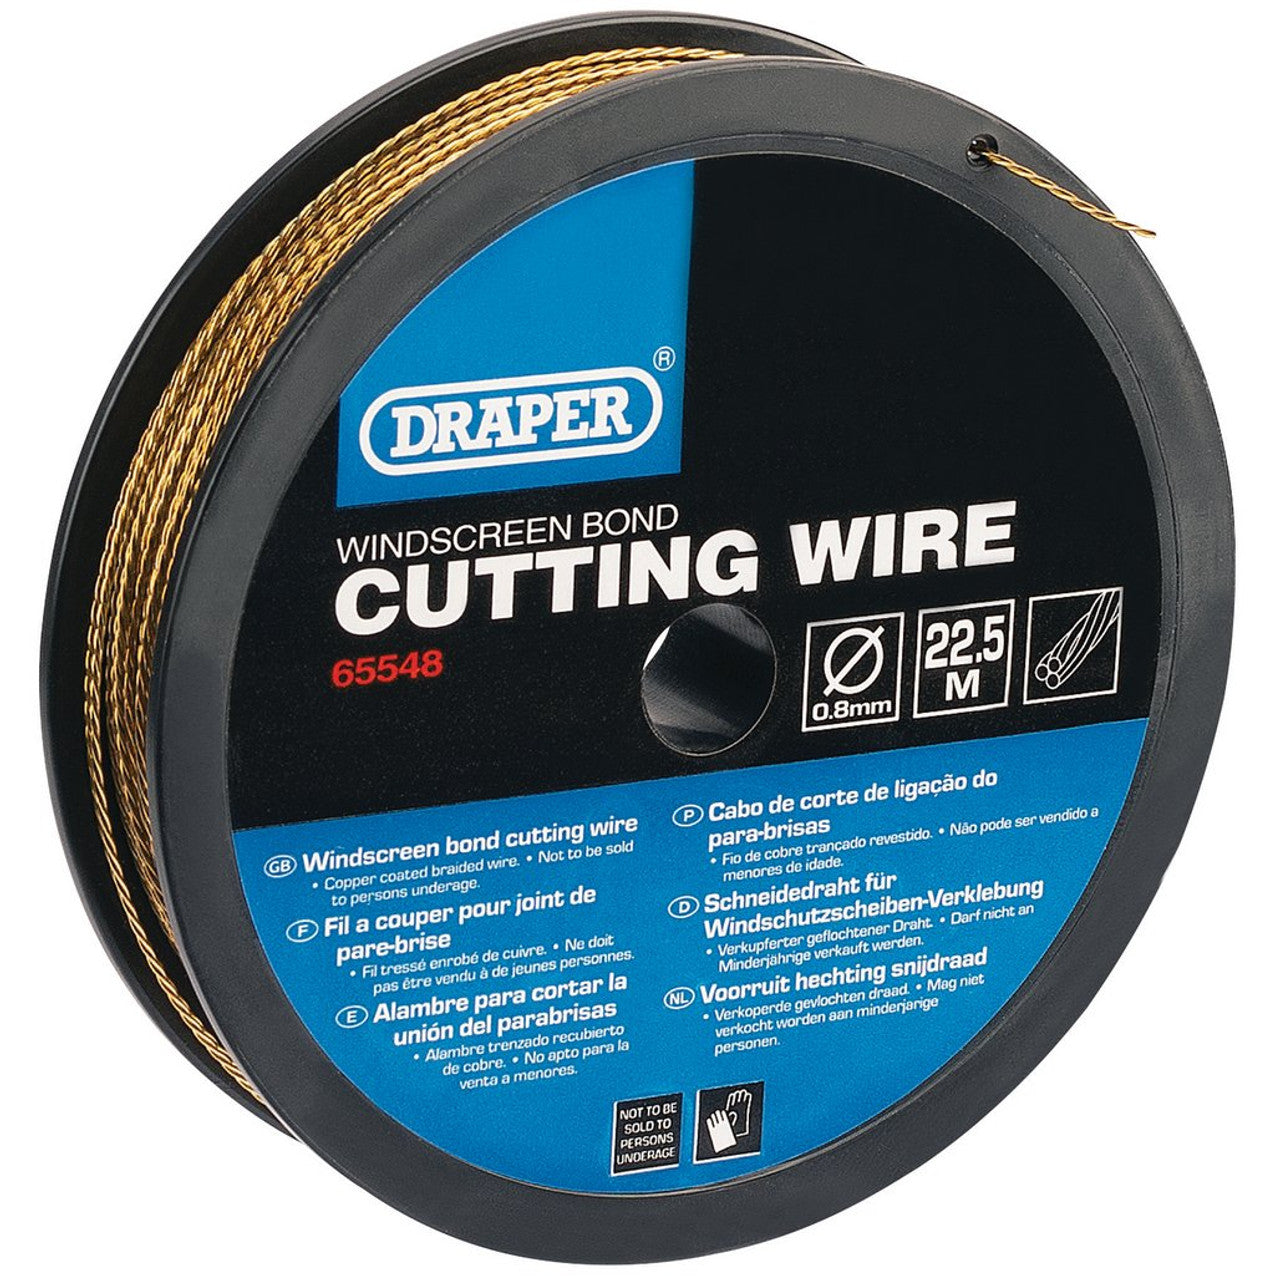 Draper 65548 Stainless Steel Braided Wire for Wire Feeder/Starter - 0.8mm, 22.5M